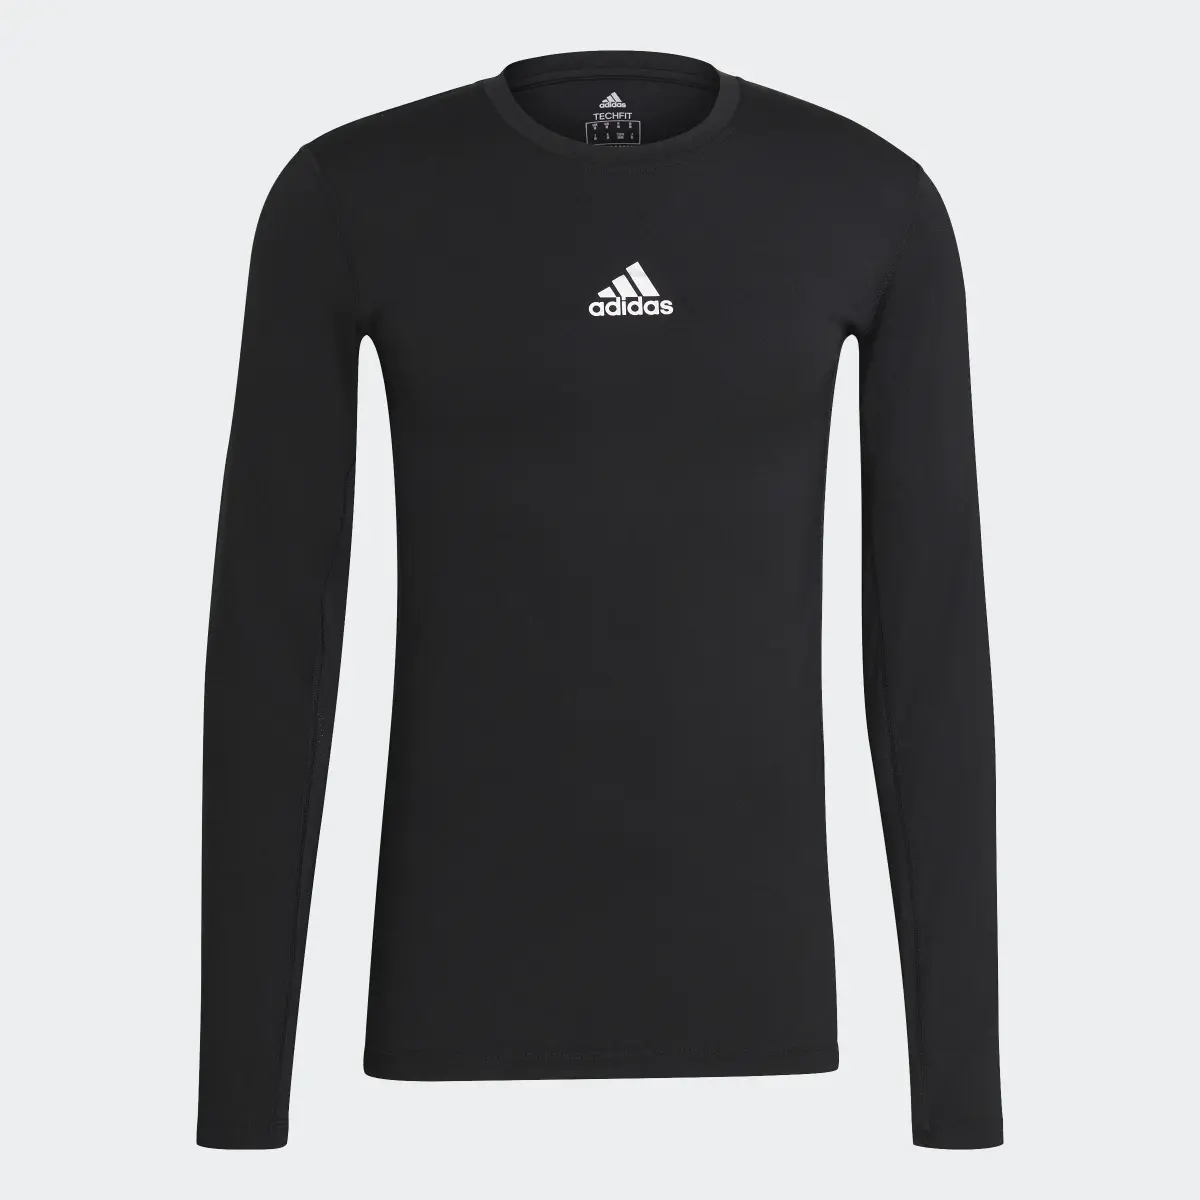 Adidas T-shirt Compression Long Sleeve. 1